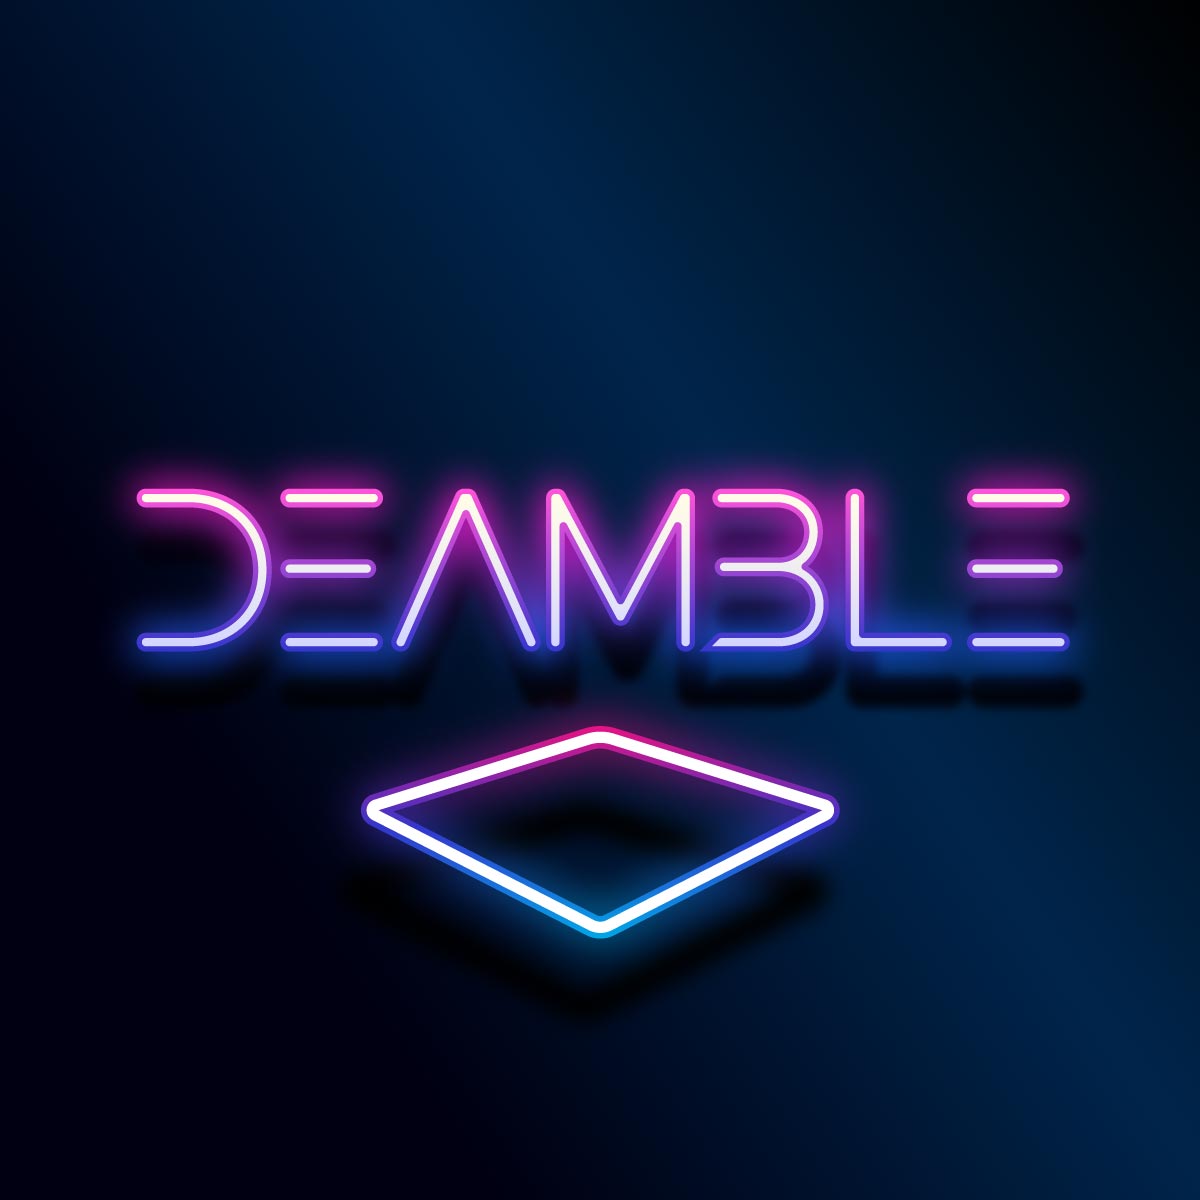 Deamble.com - Branding Design for sale